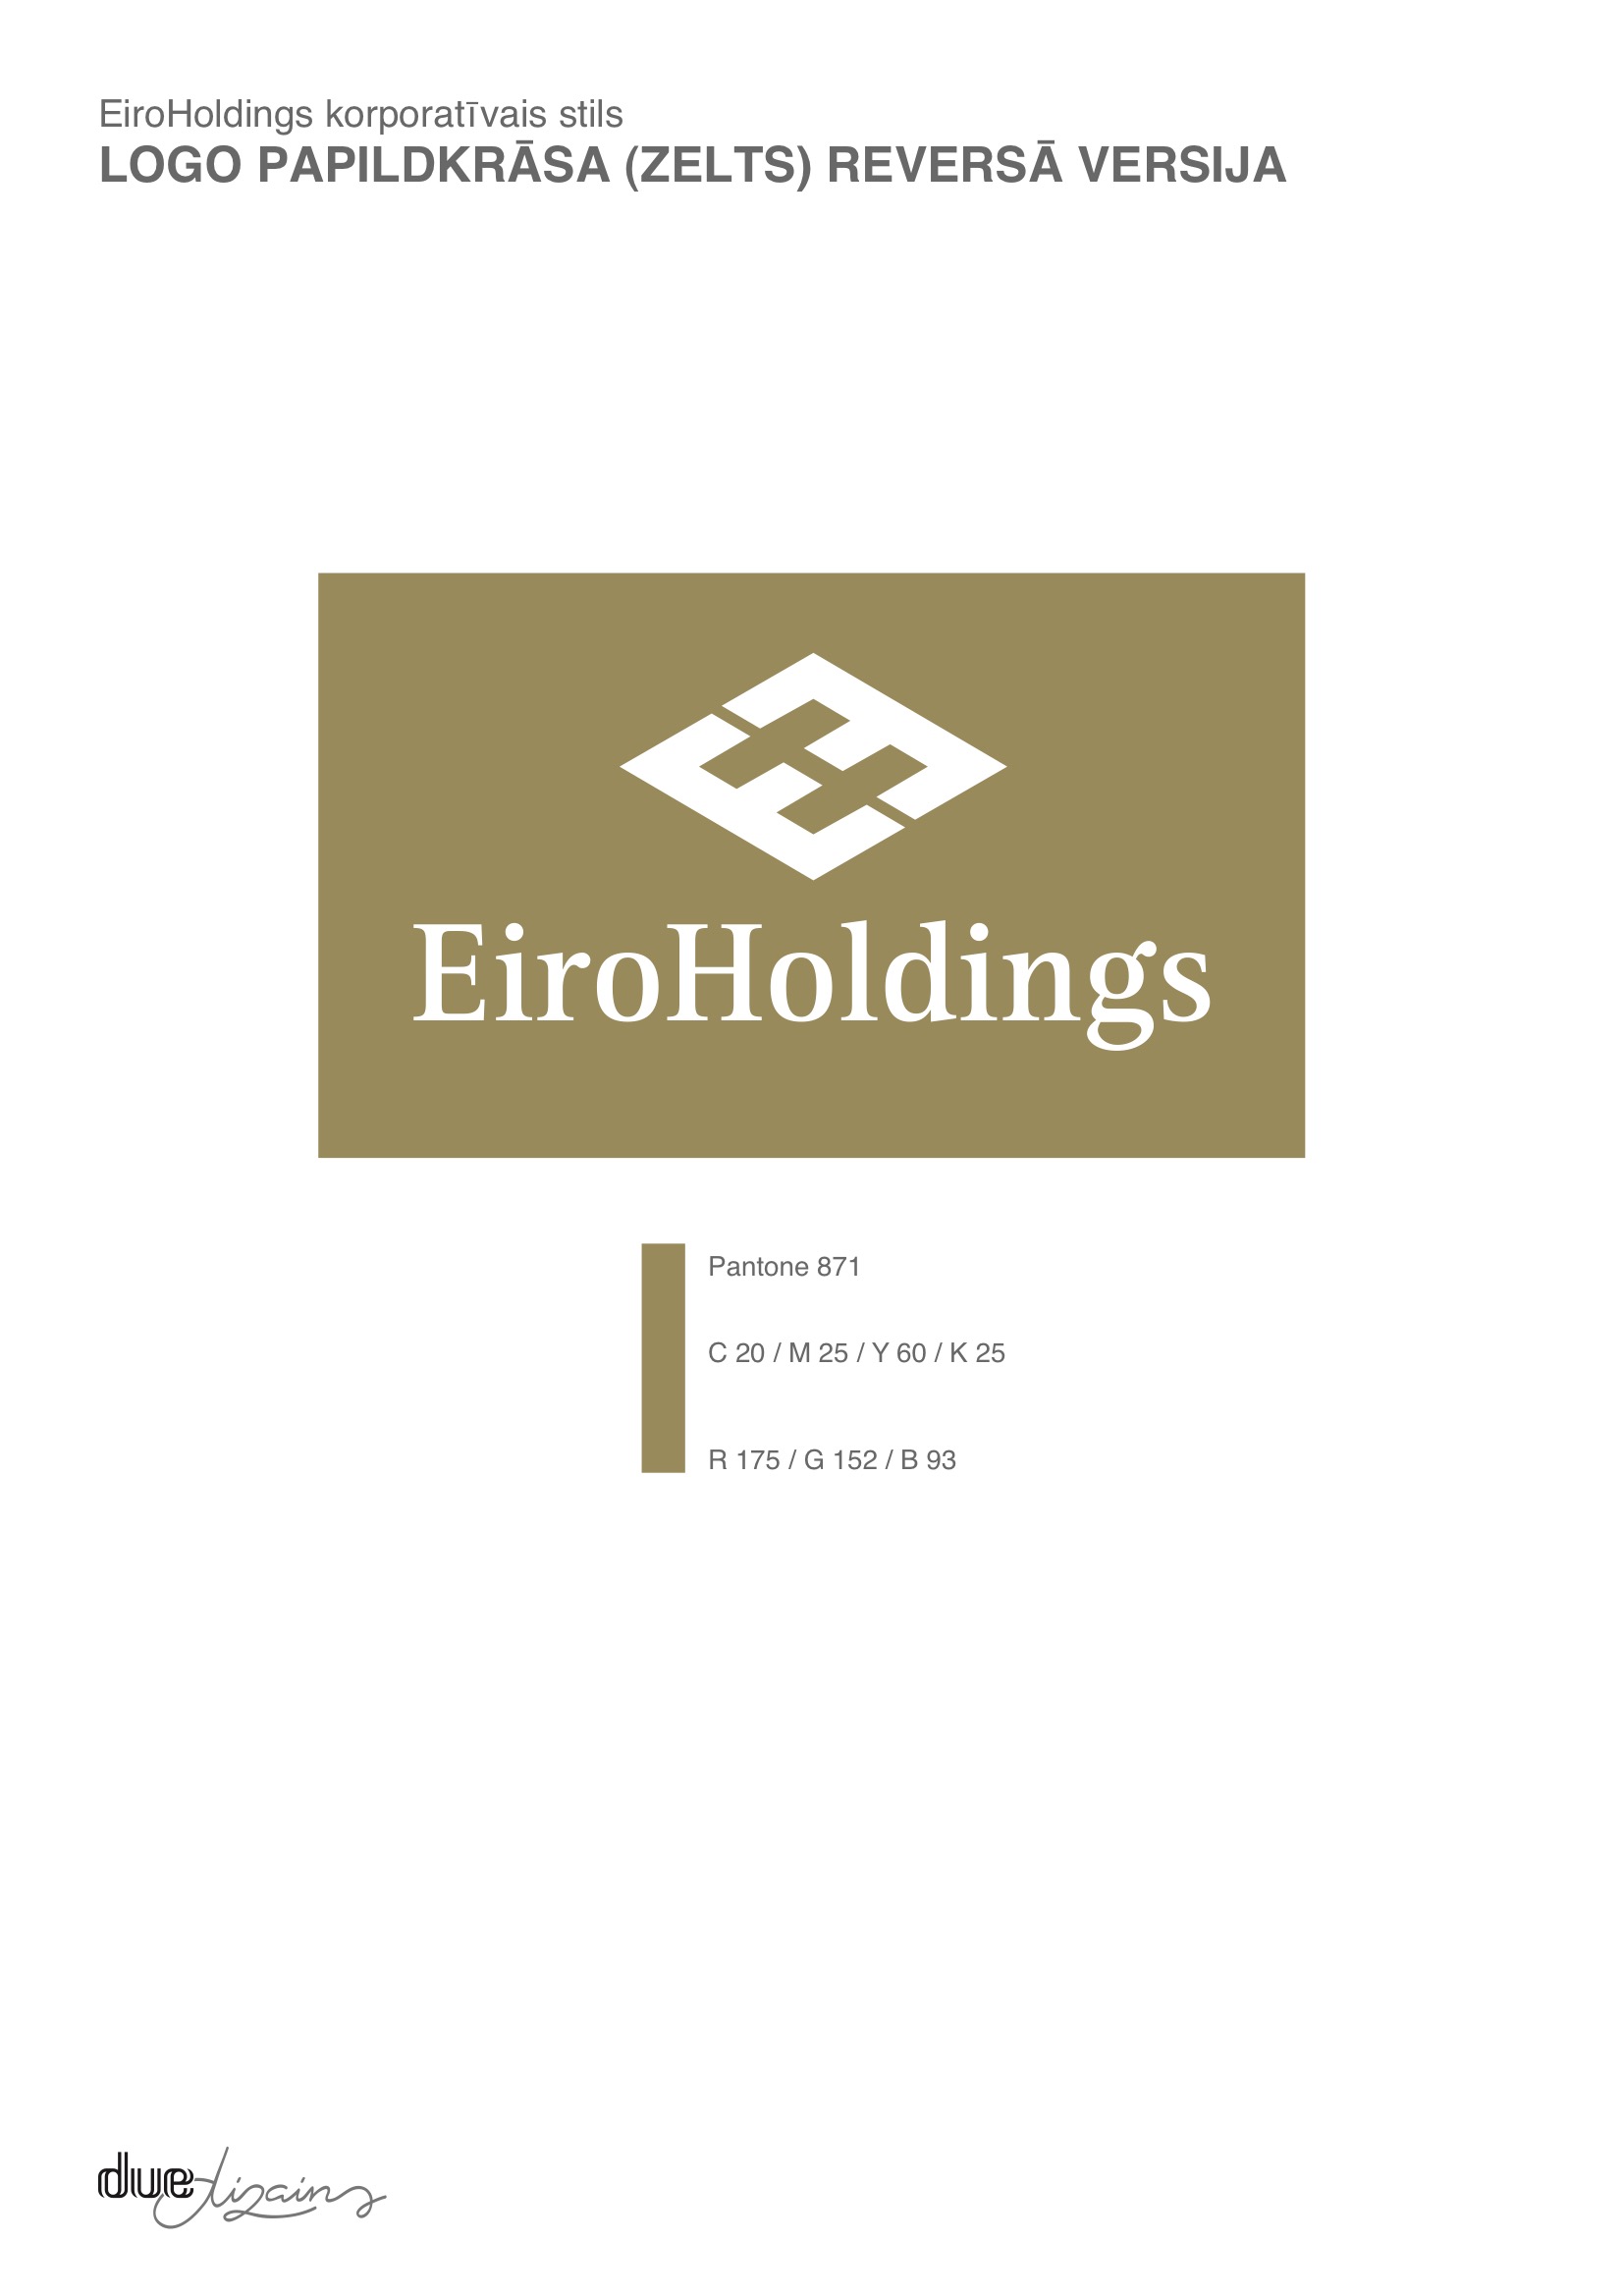 Eiroholdings_logo_guidelines 6